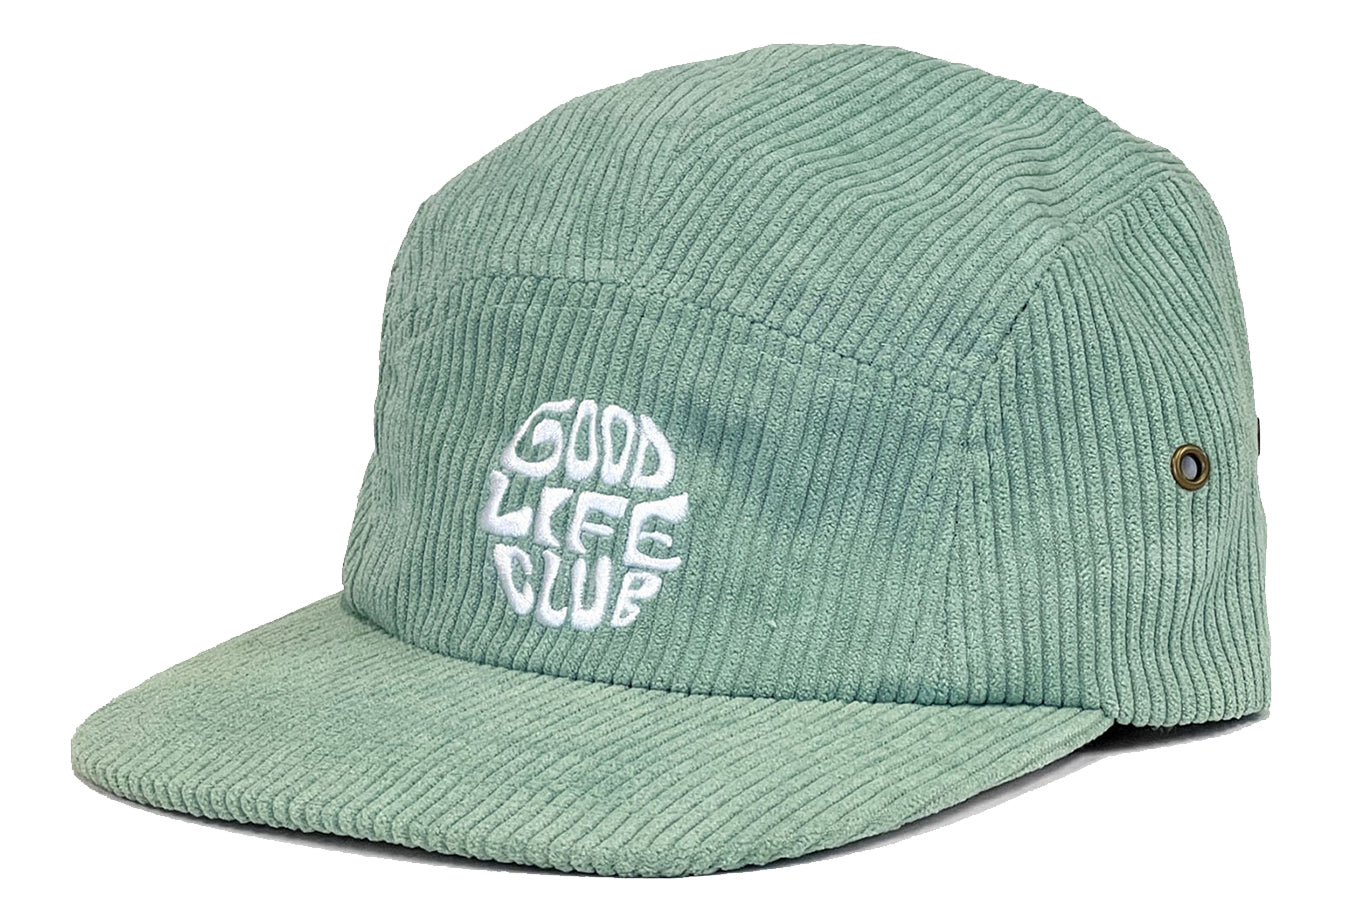 GOOD LIFE CLUB CAP – Boutique Radical Sport